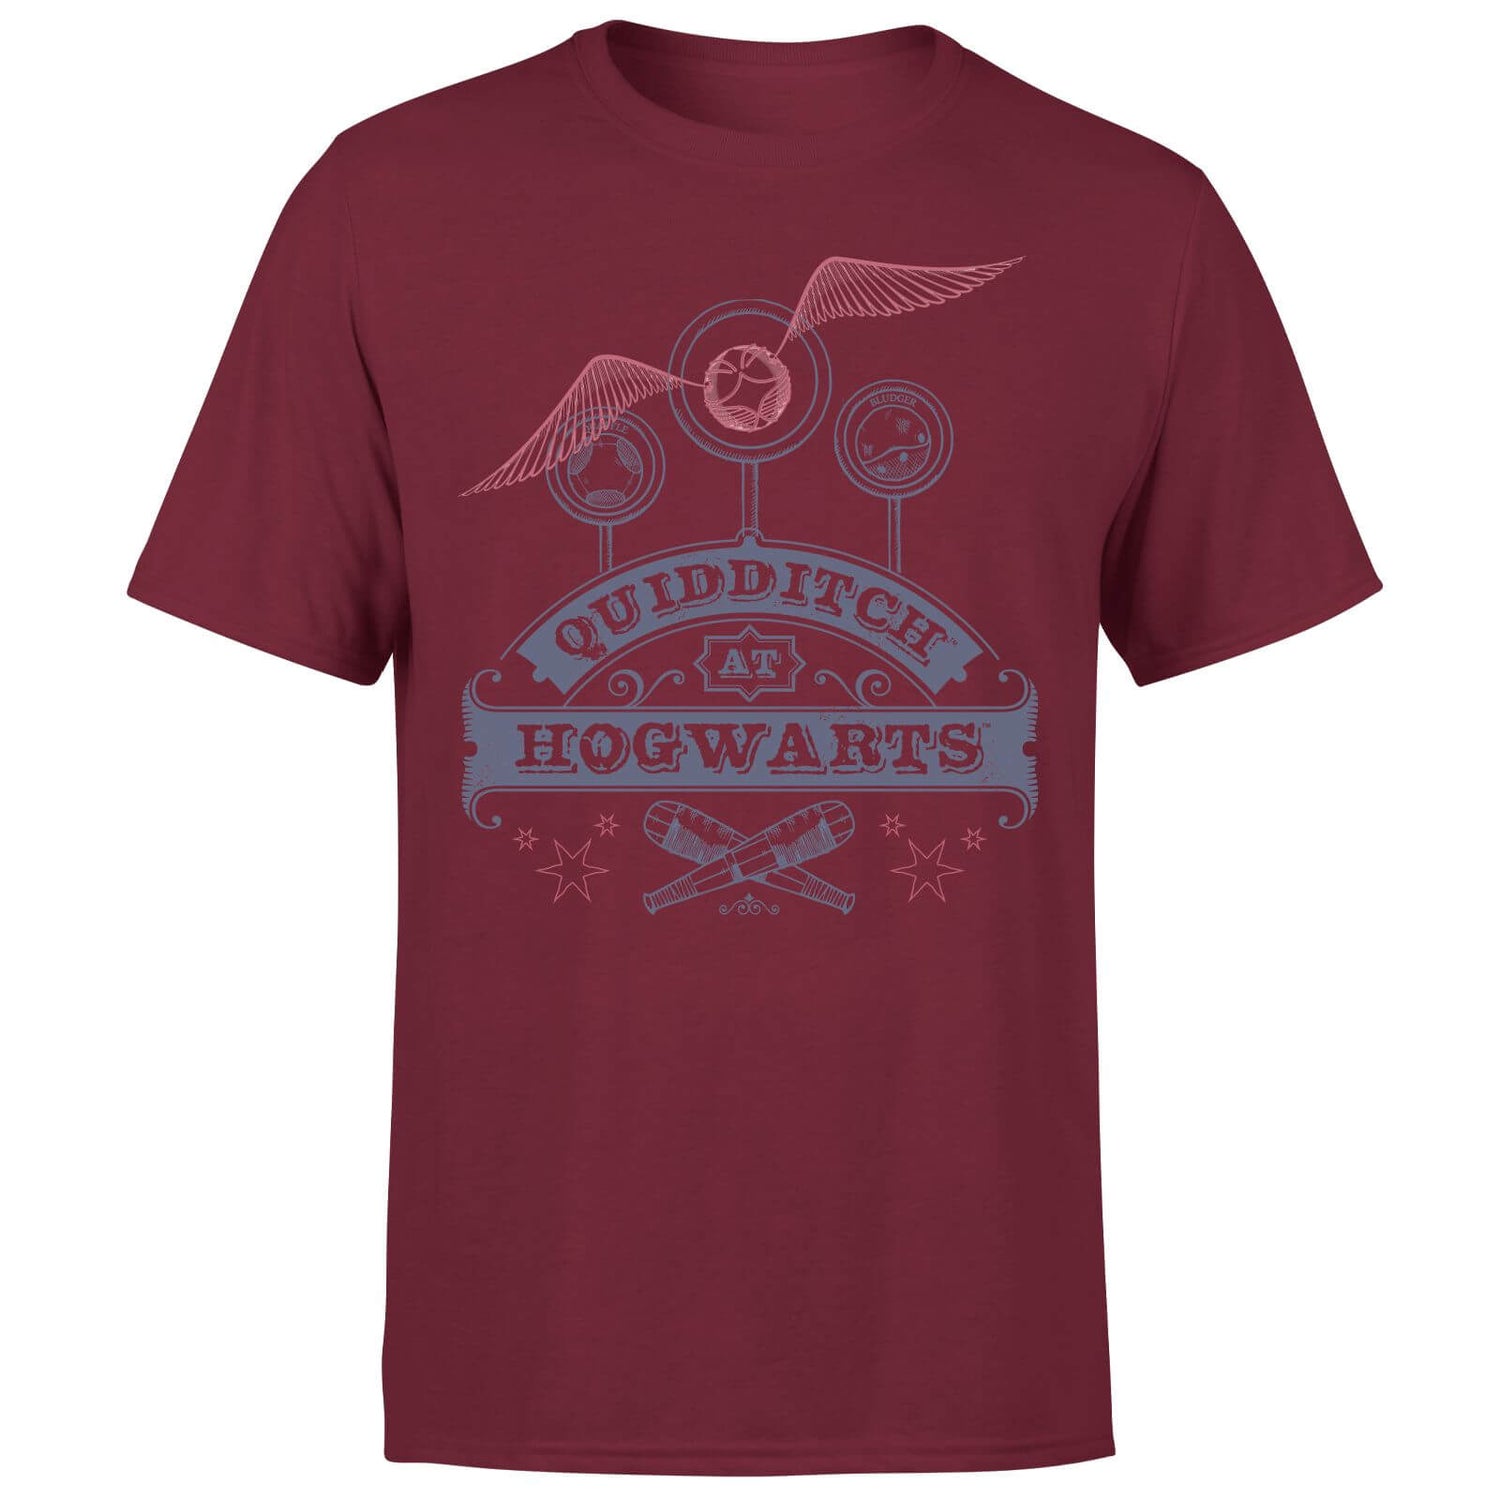 Harry Potter Quidditch At Hogwarts Men's T-Shirt - Burgundy